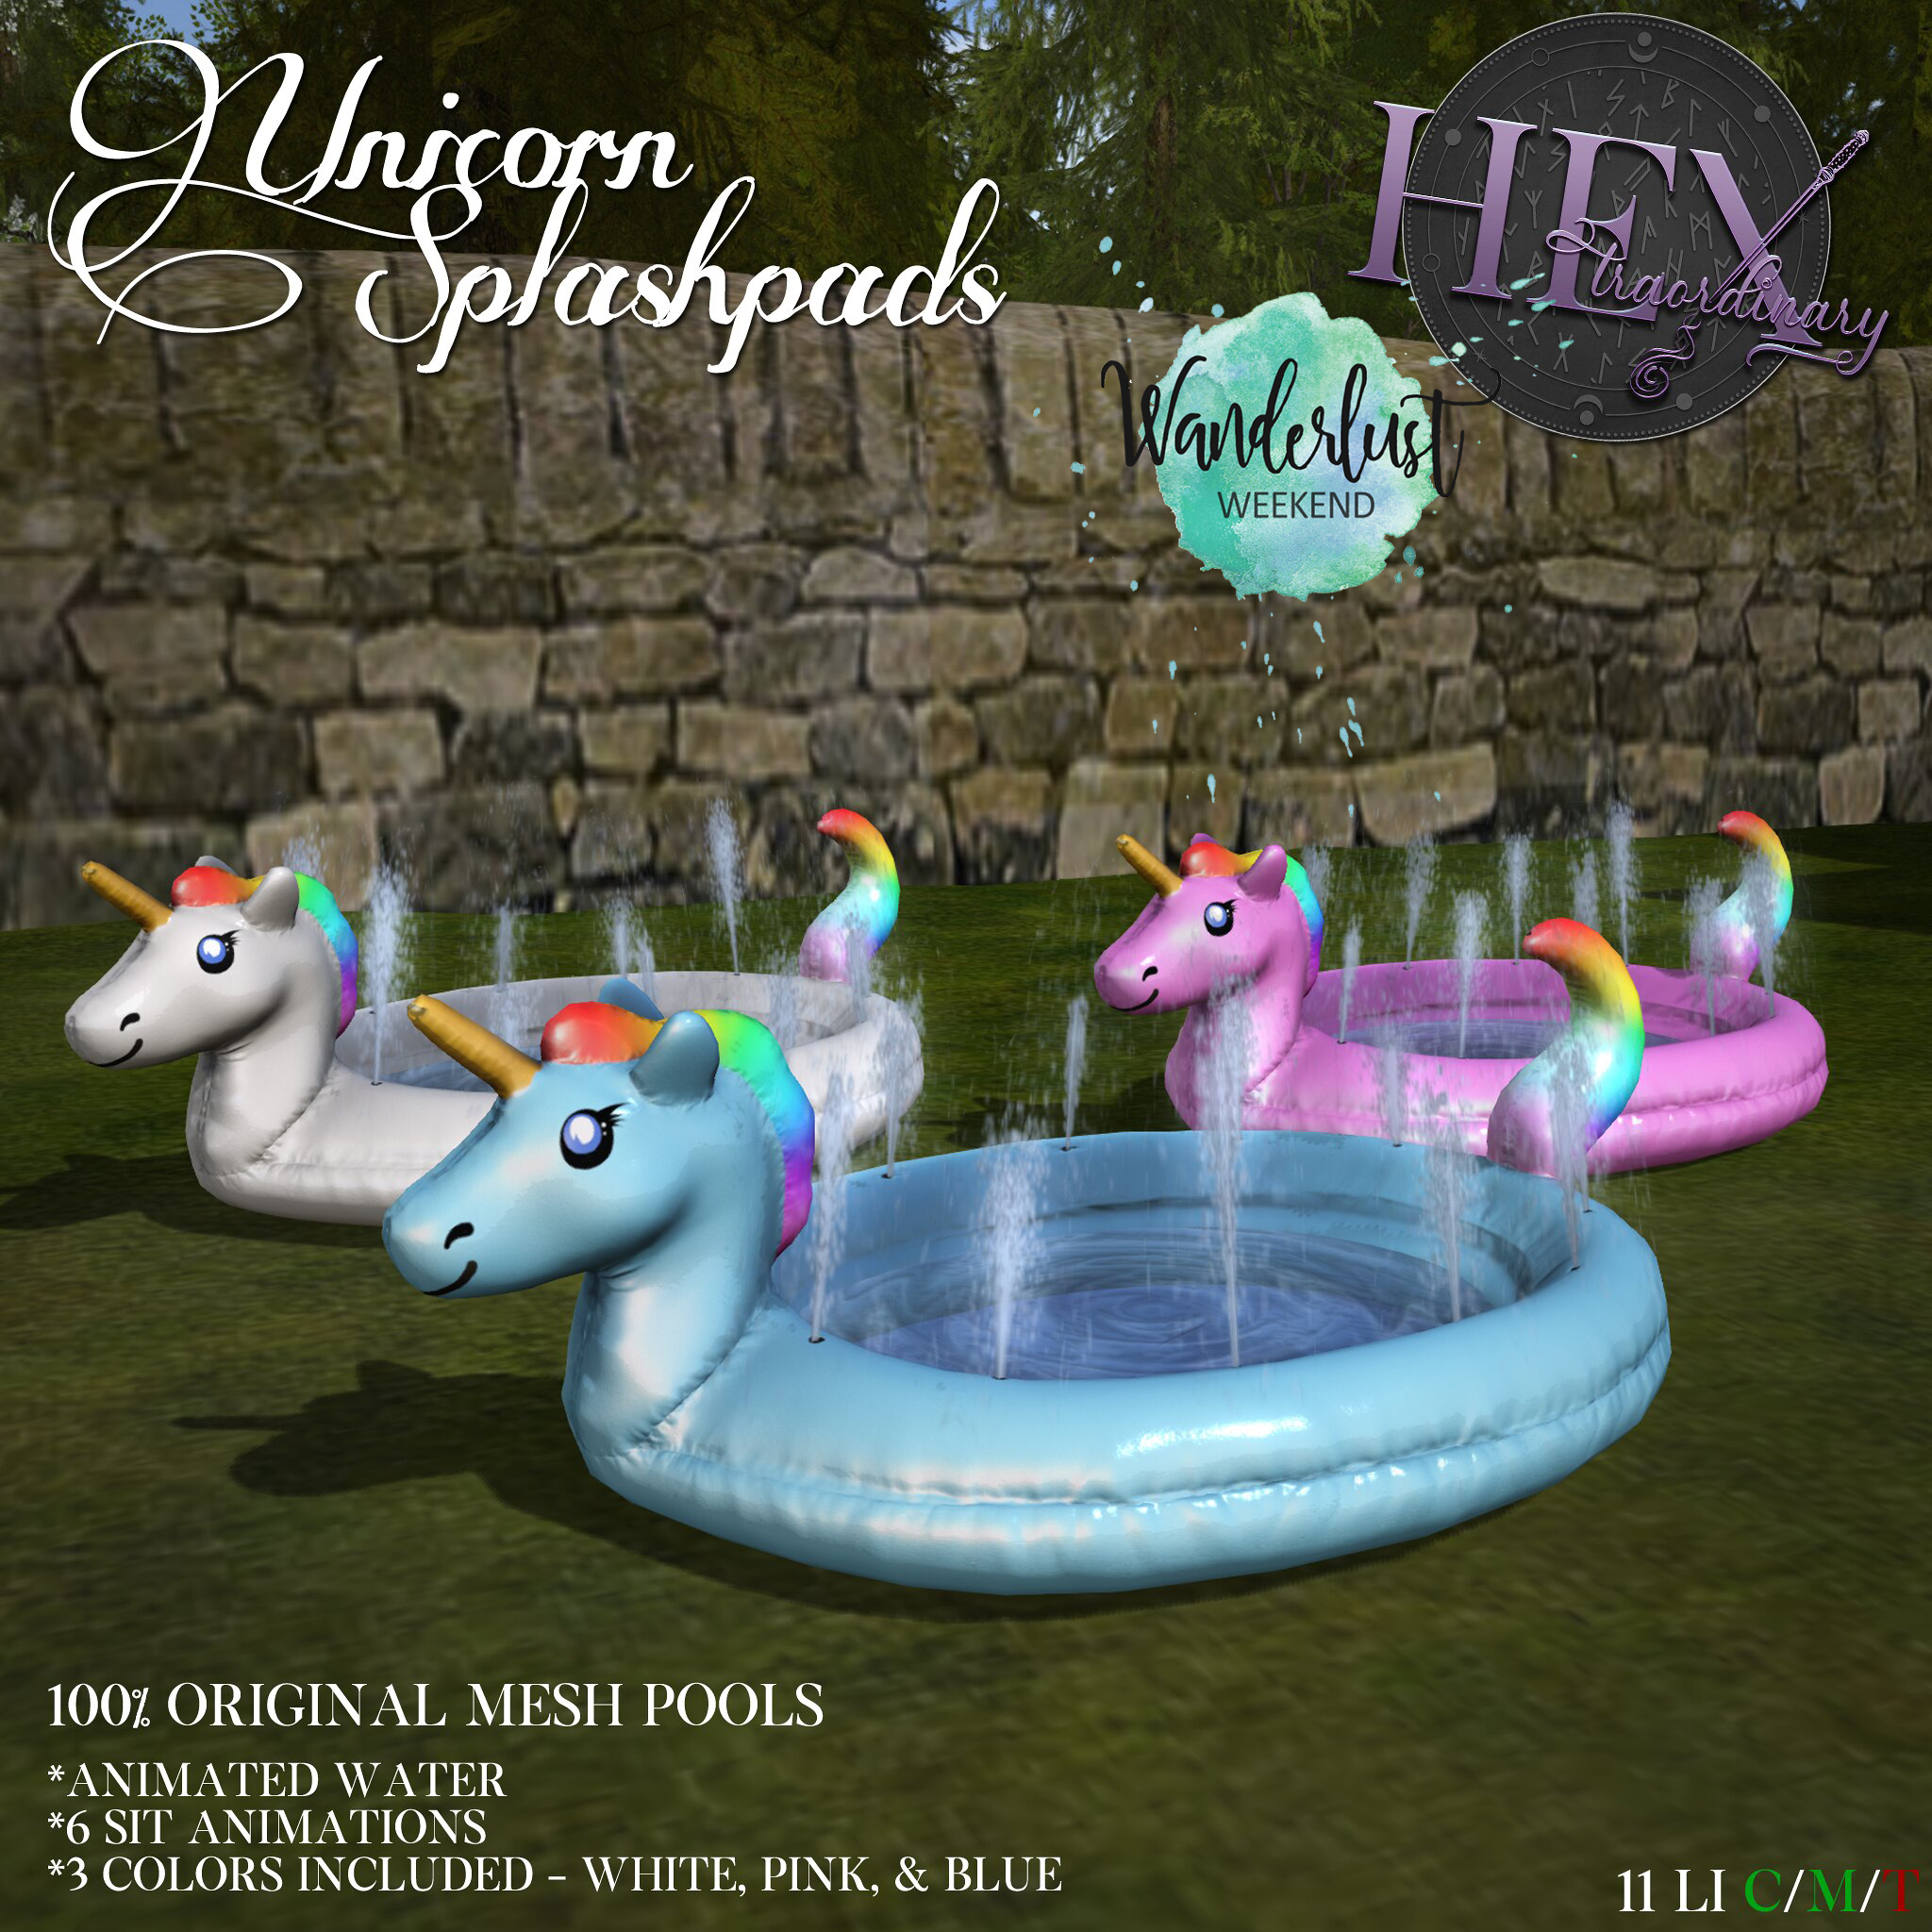 HEXtraordinary – Unicorn Splash Pads